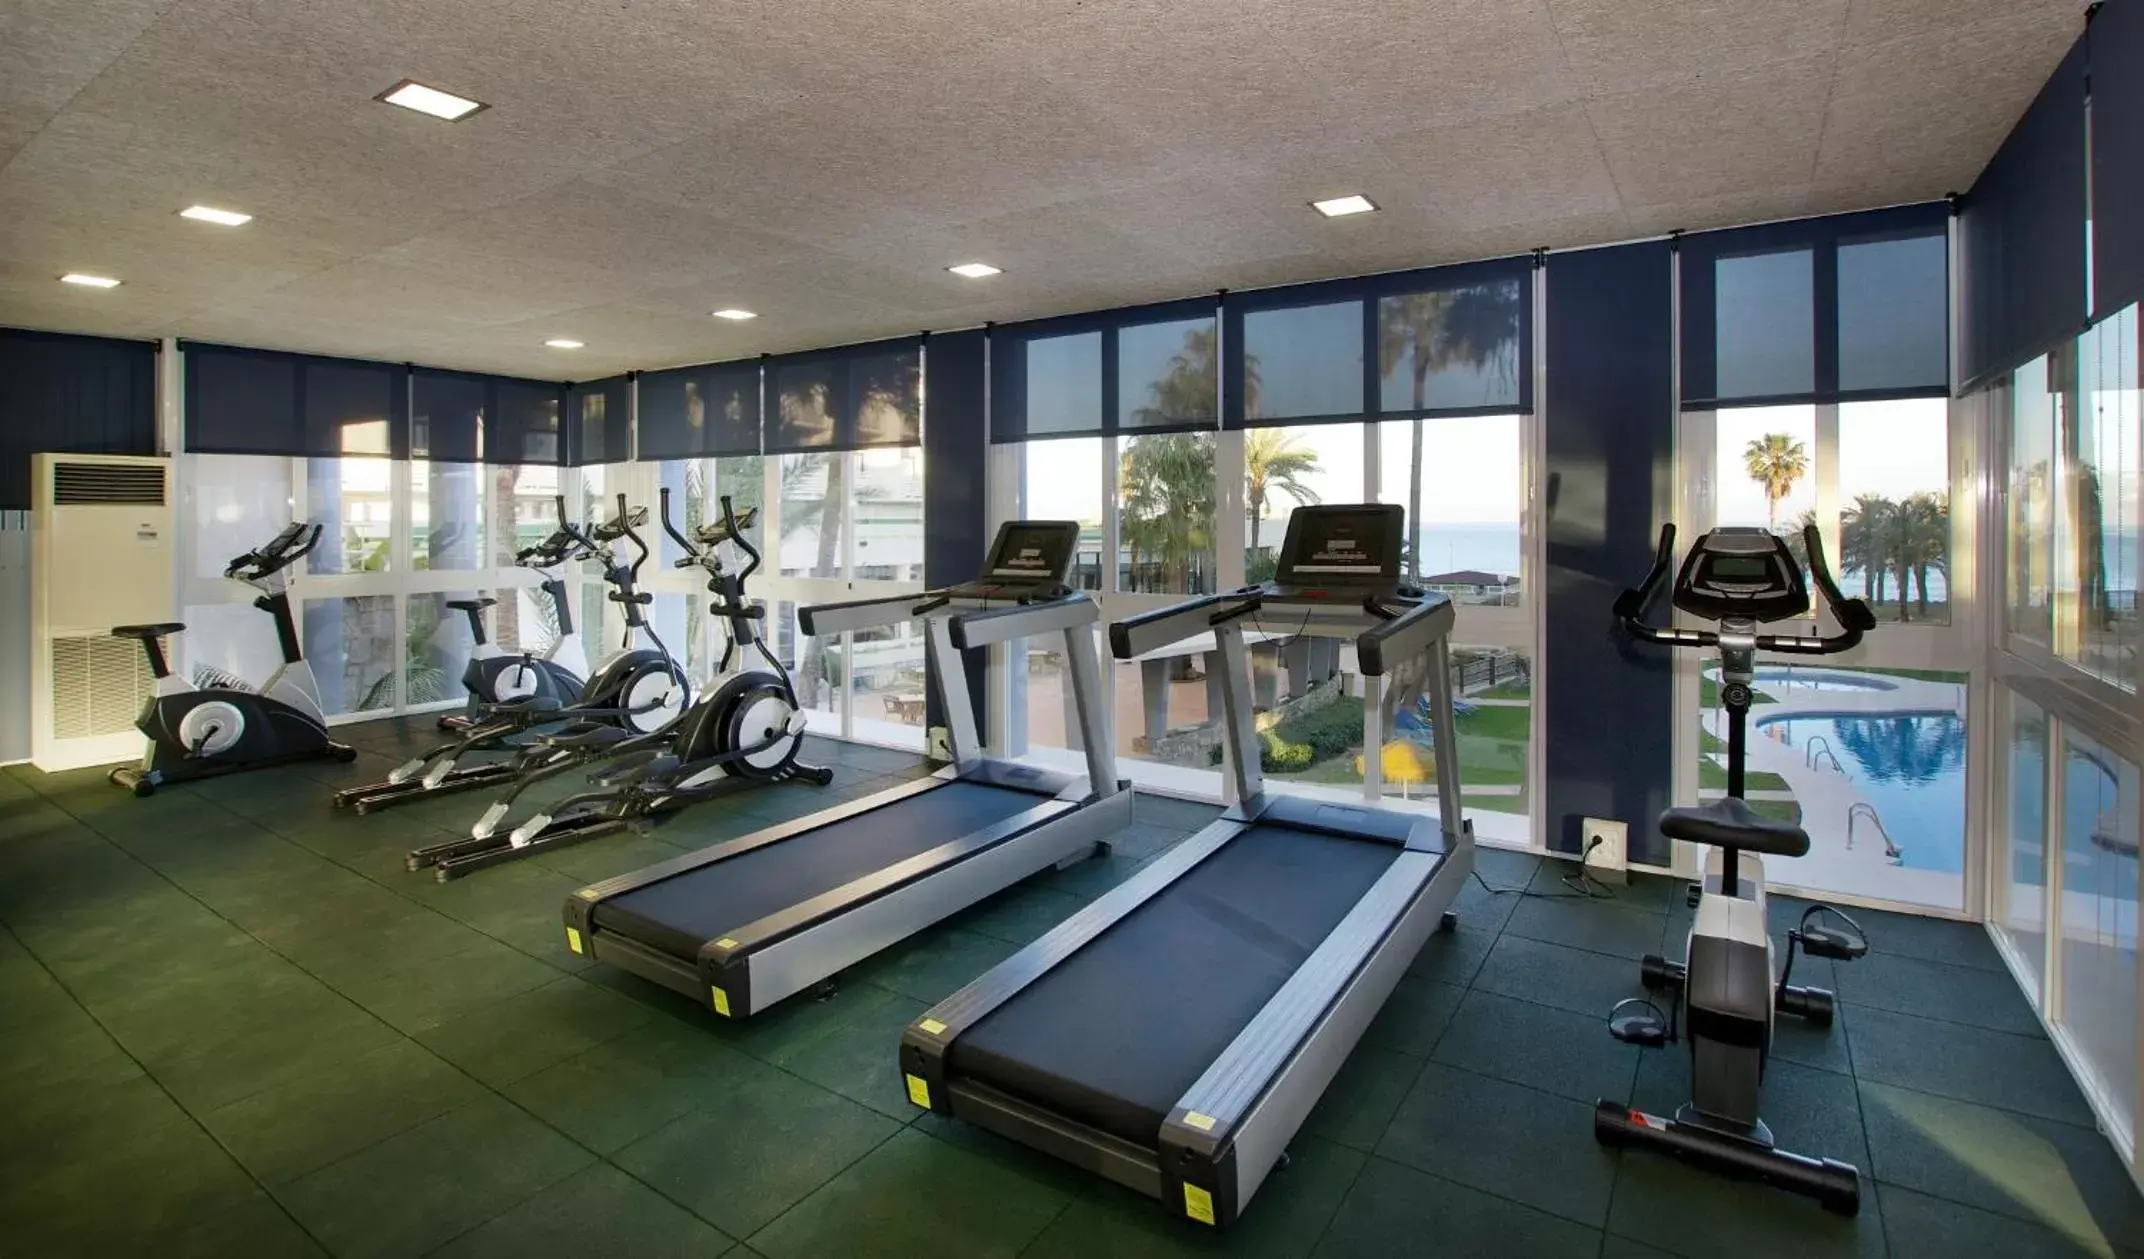 Fitness centre/facilities, Fitness Center/Facilities in Medplaya Hotel Pez Espada